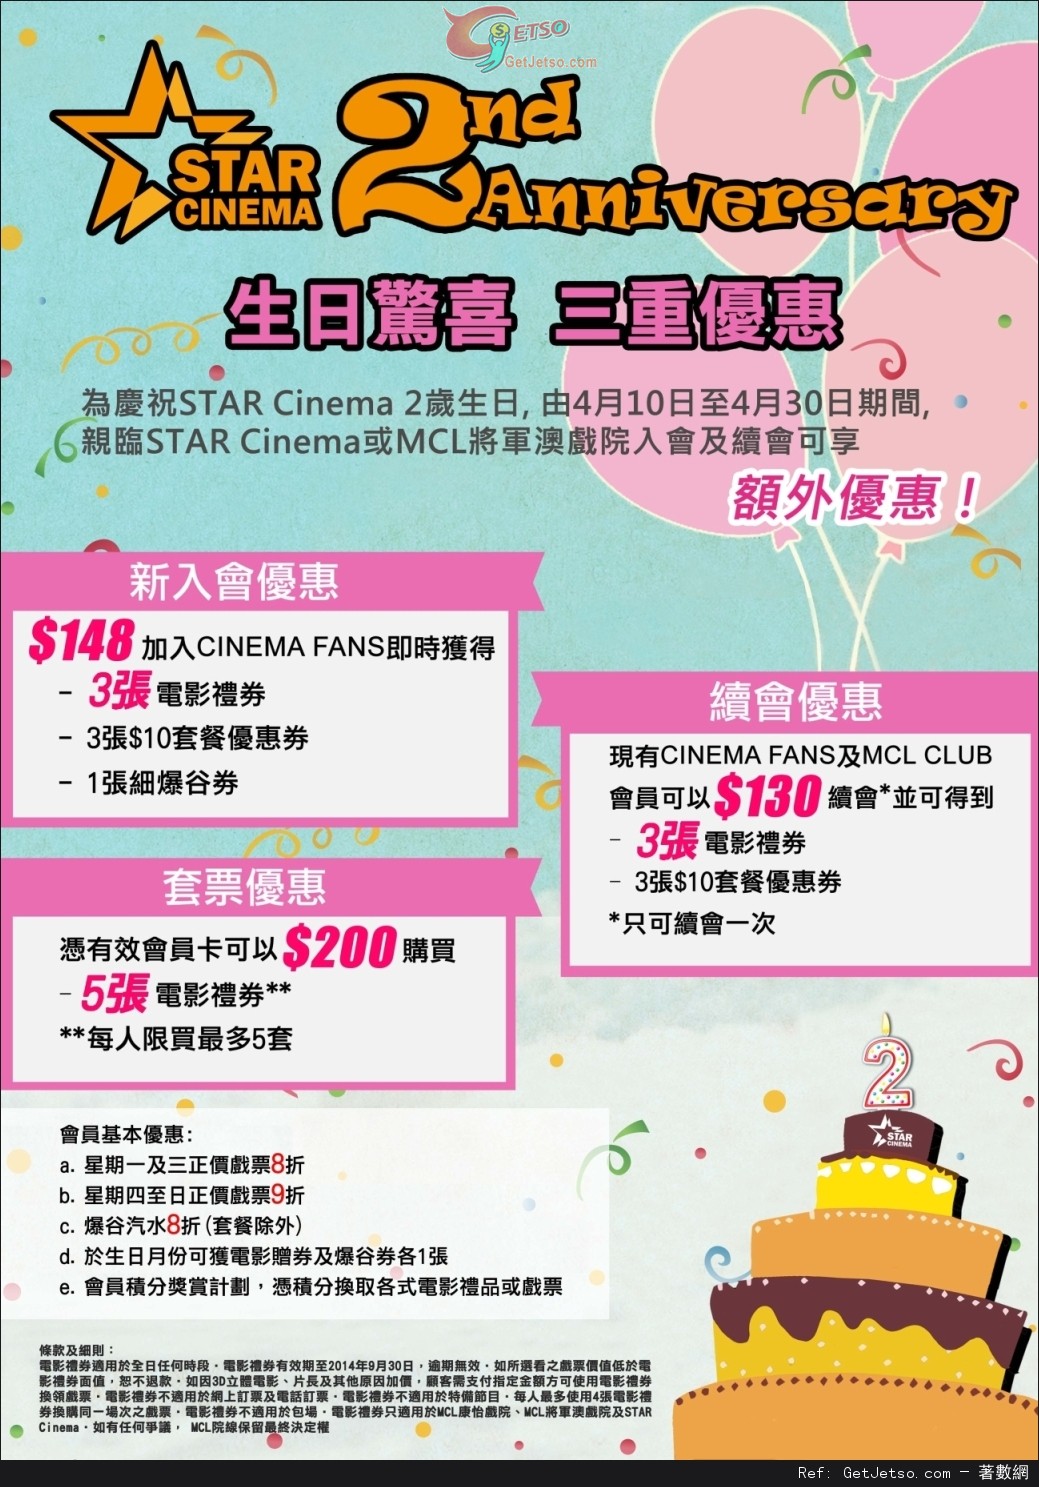 MCL STAR Cinema 兩歲生日三重優惠(至14年4月30日)圖片1